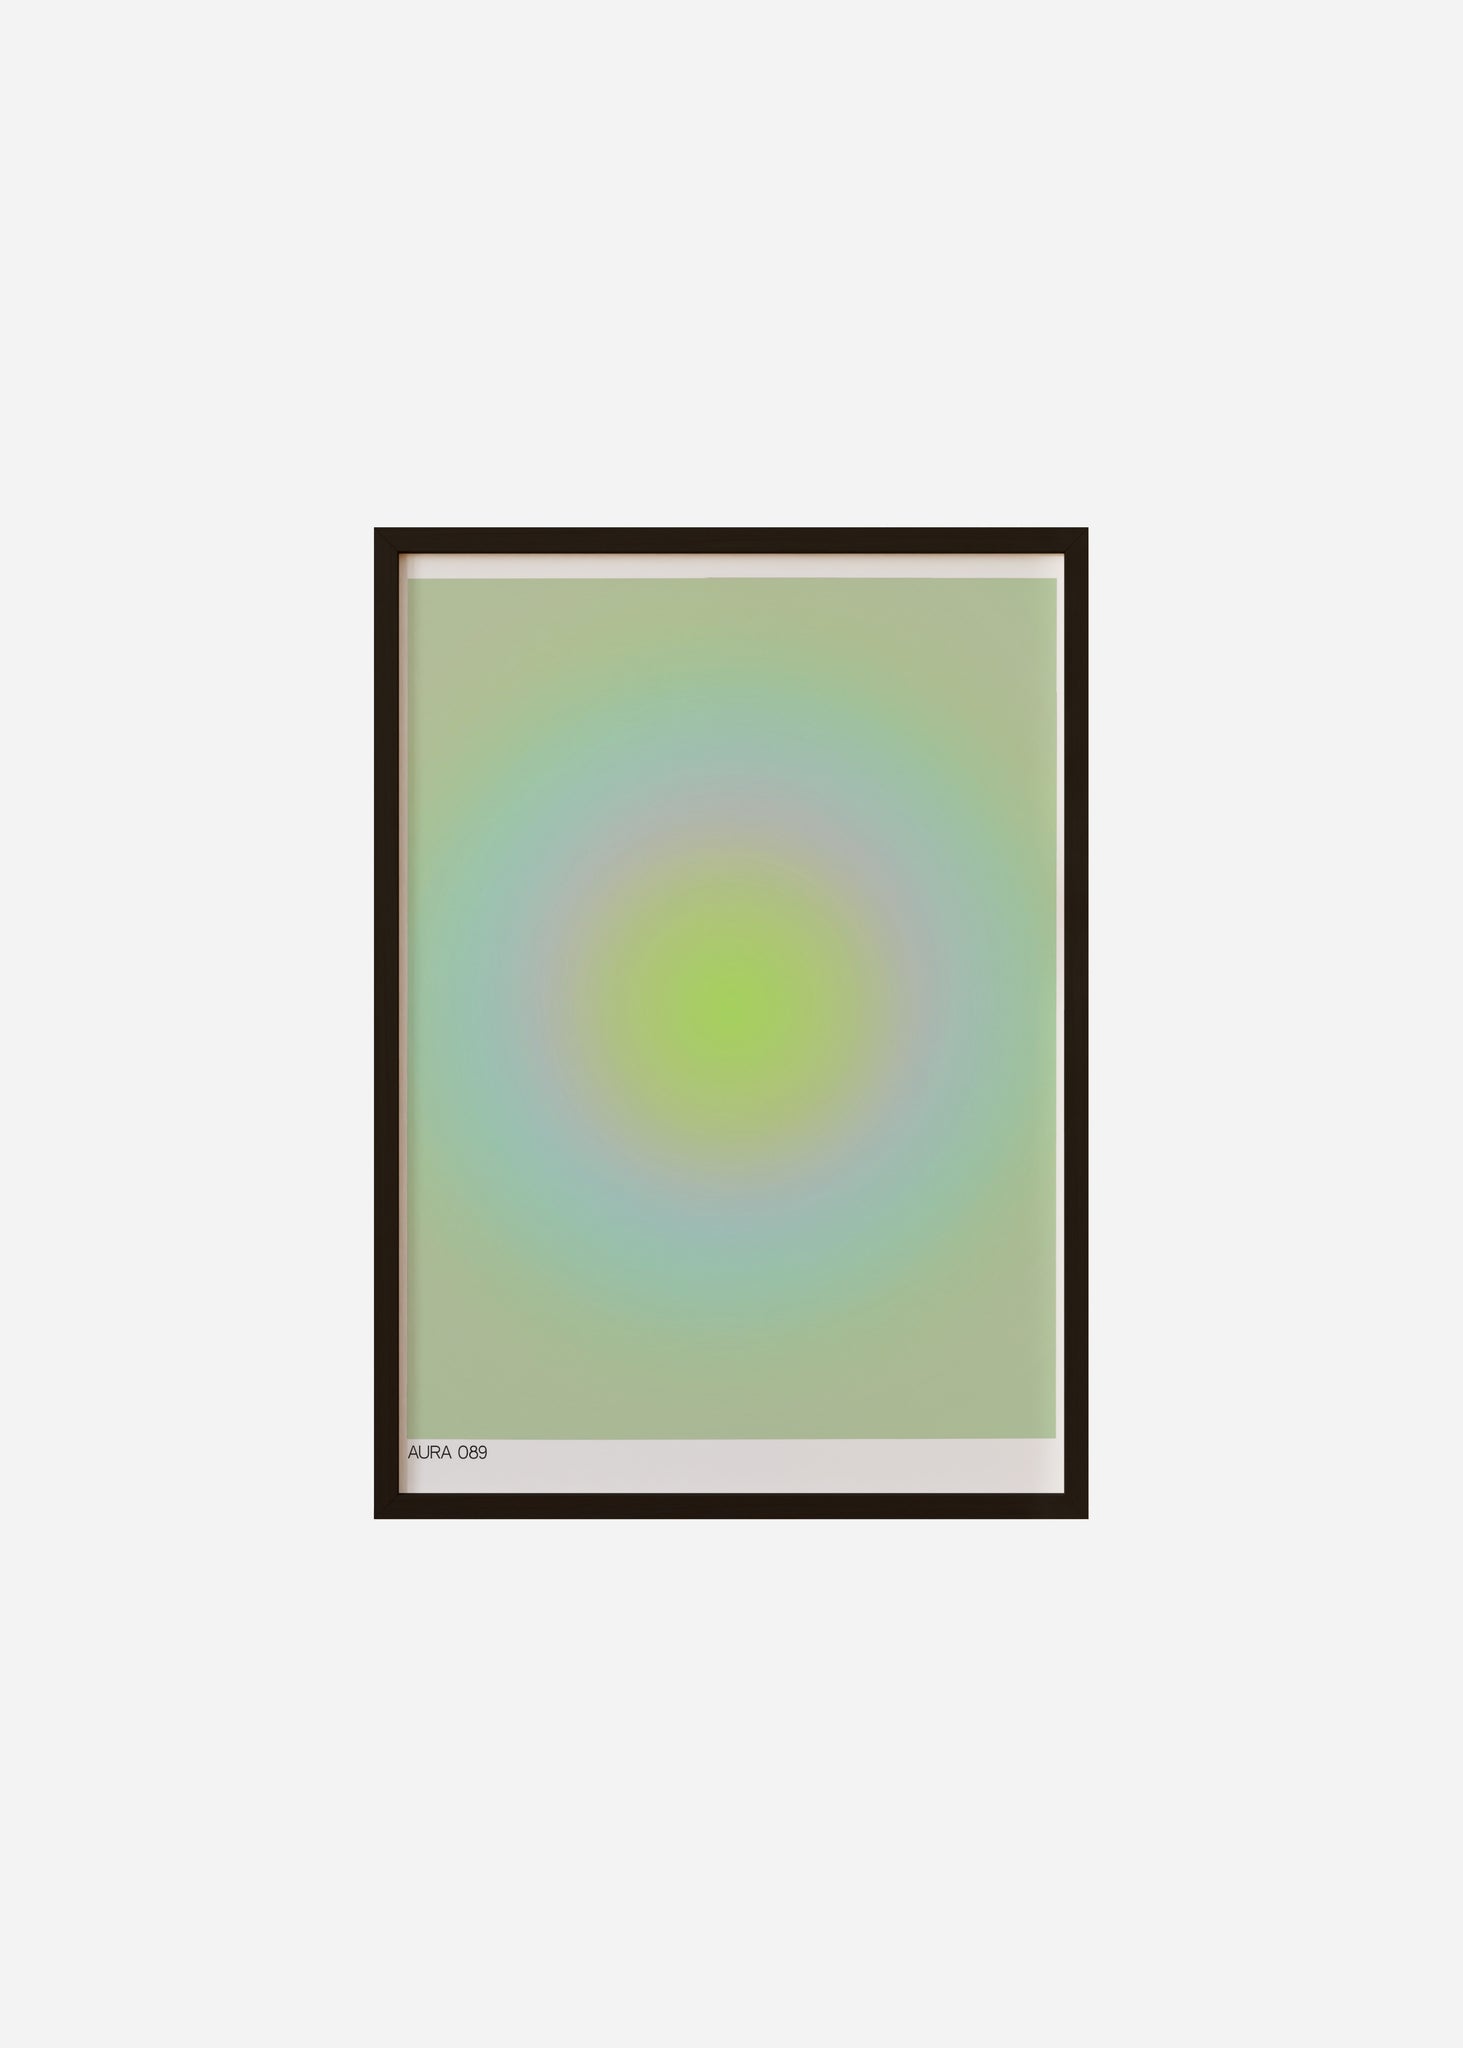 aura 089 Framed Print